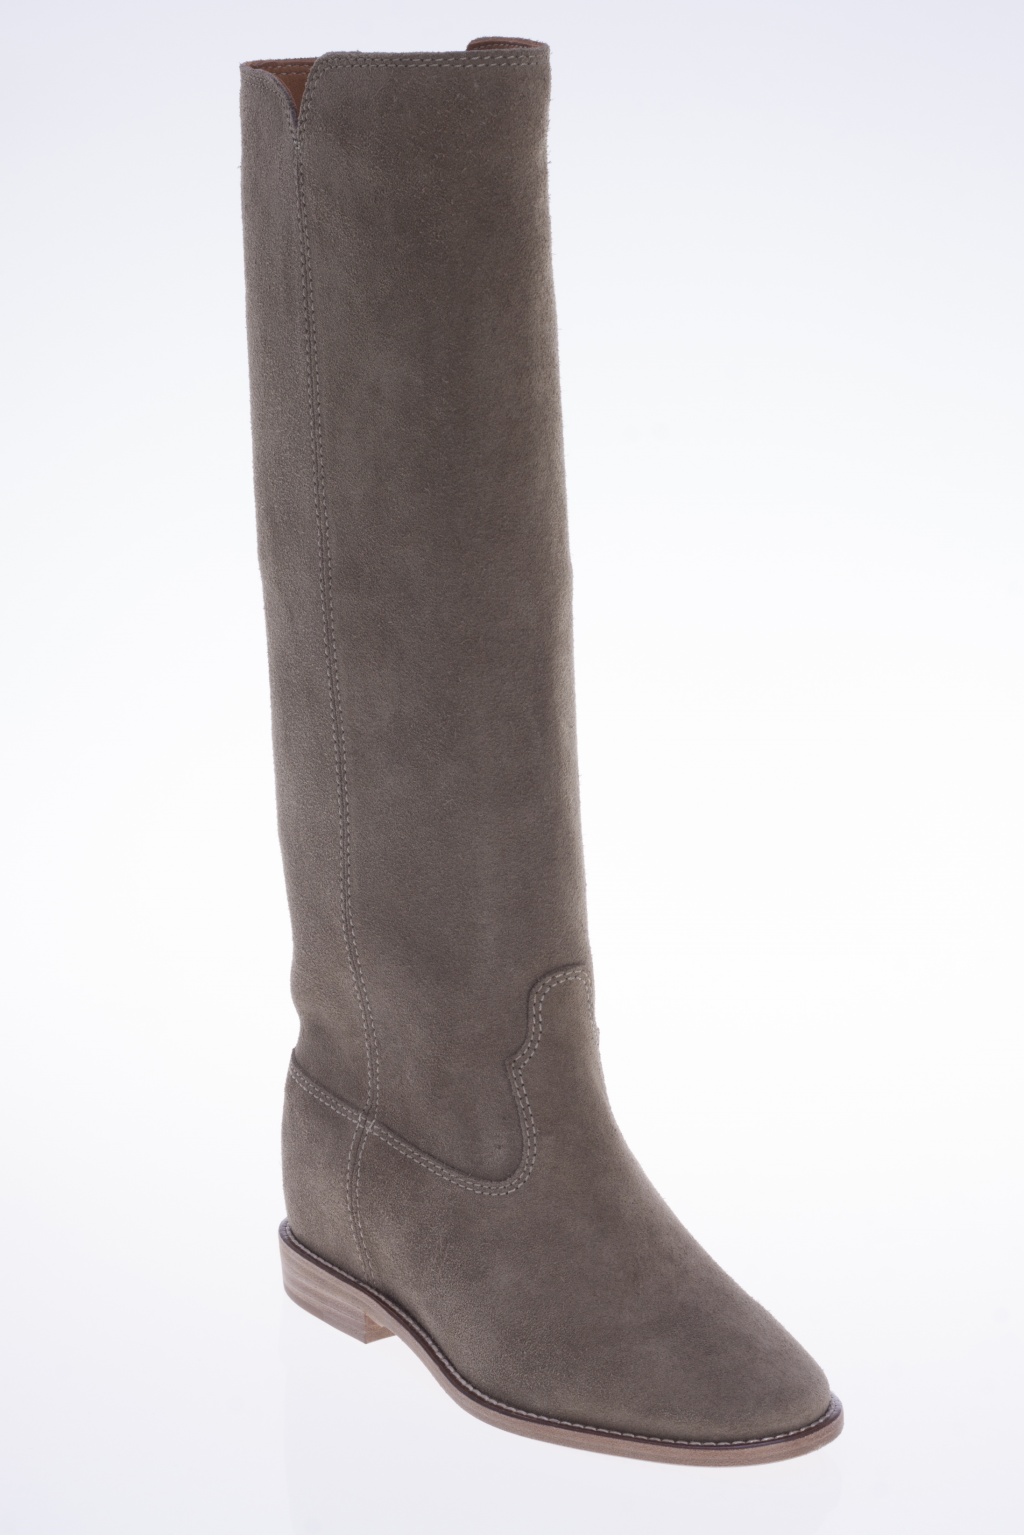 Marant Suede Boots | Women's | Vitkac